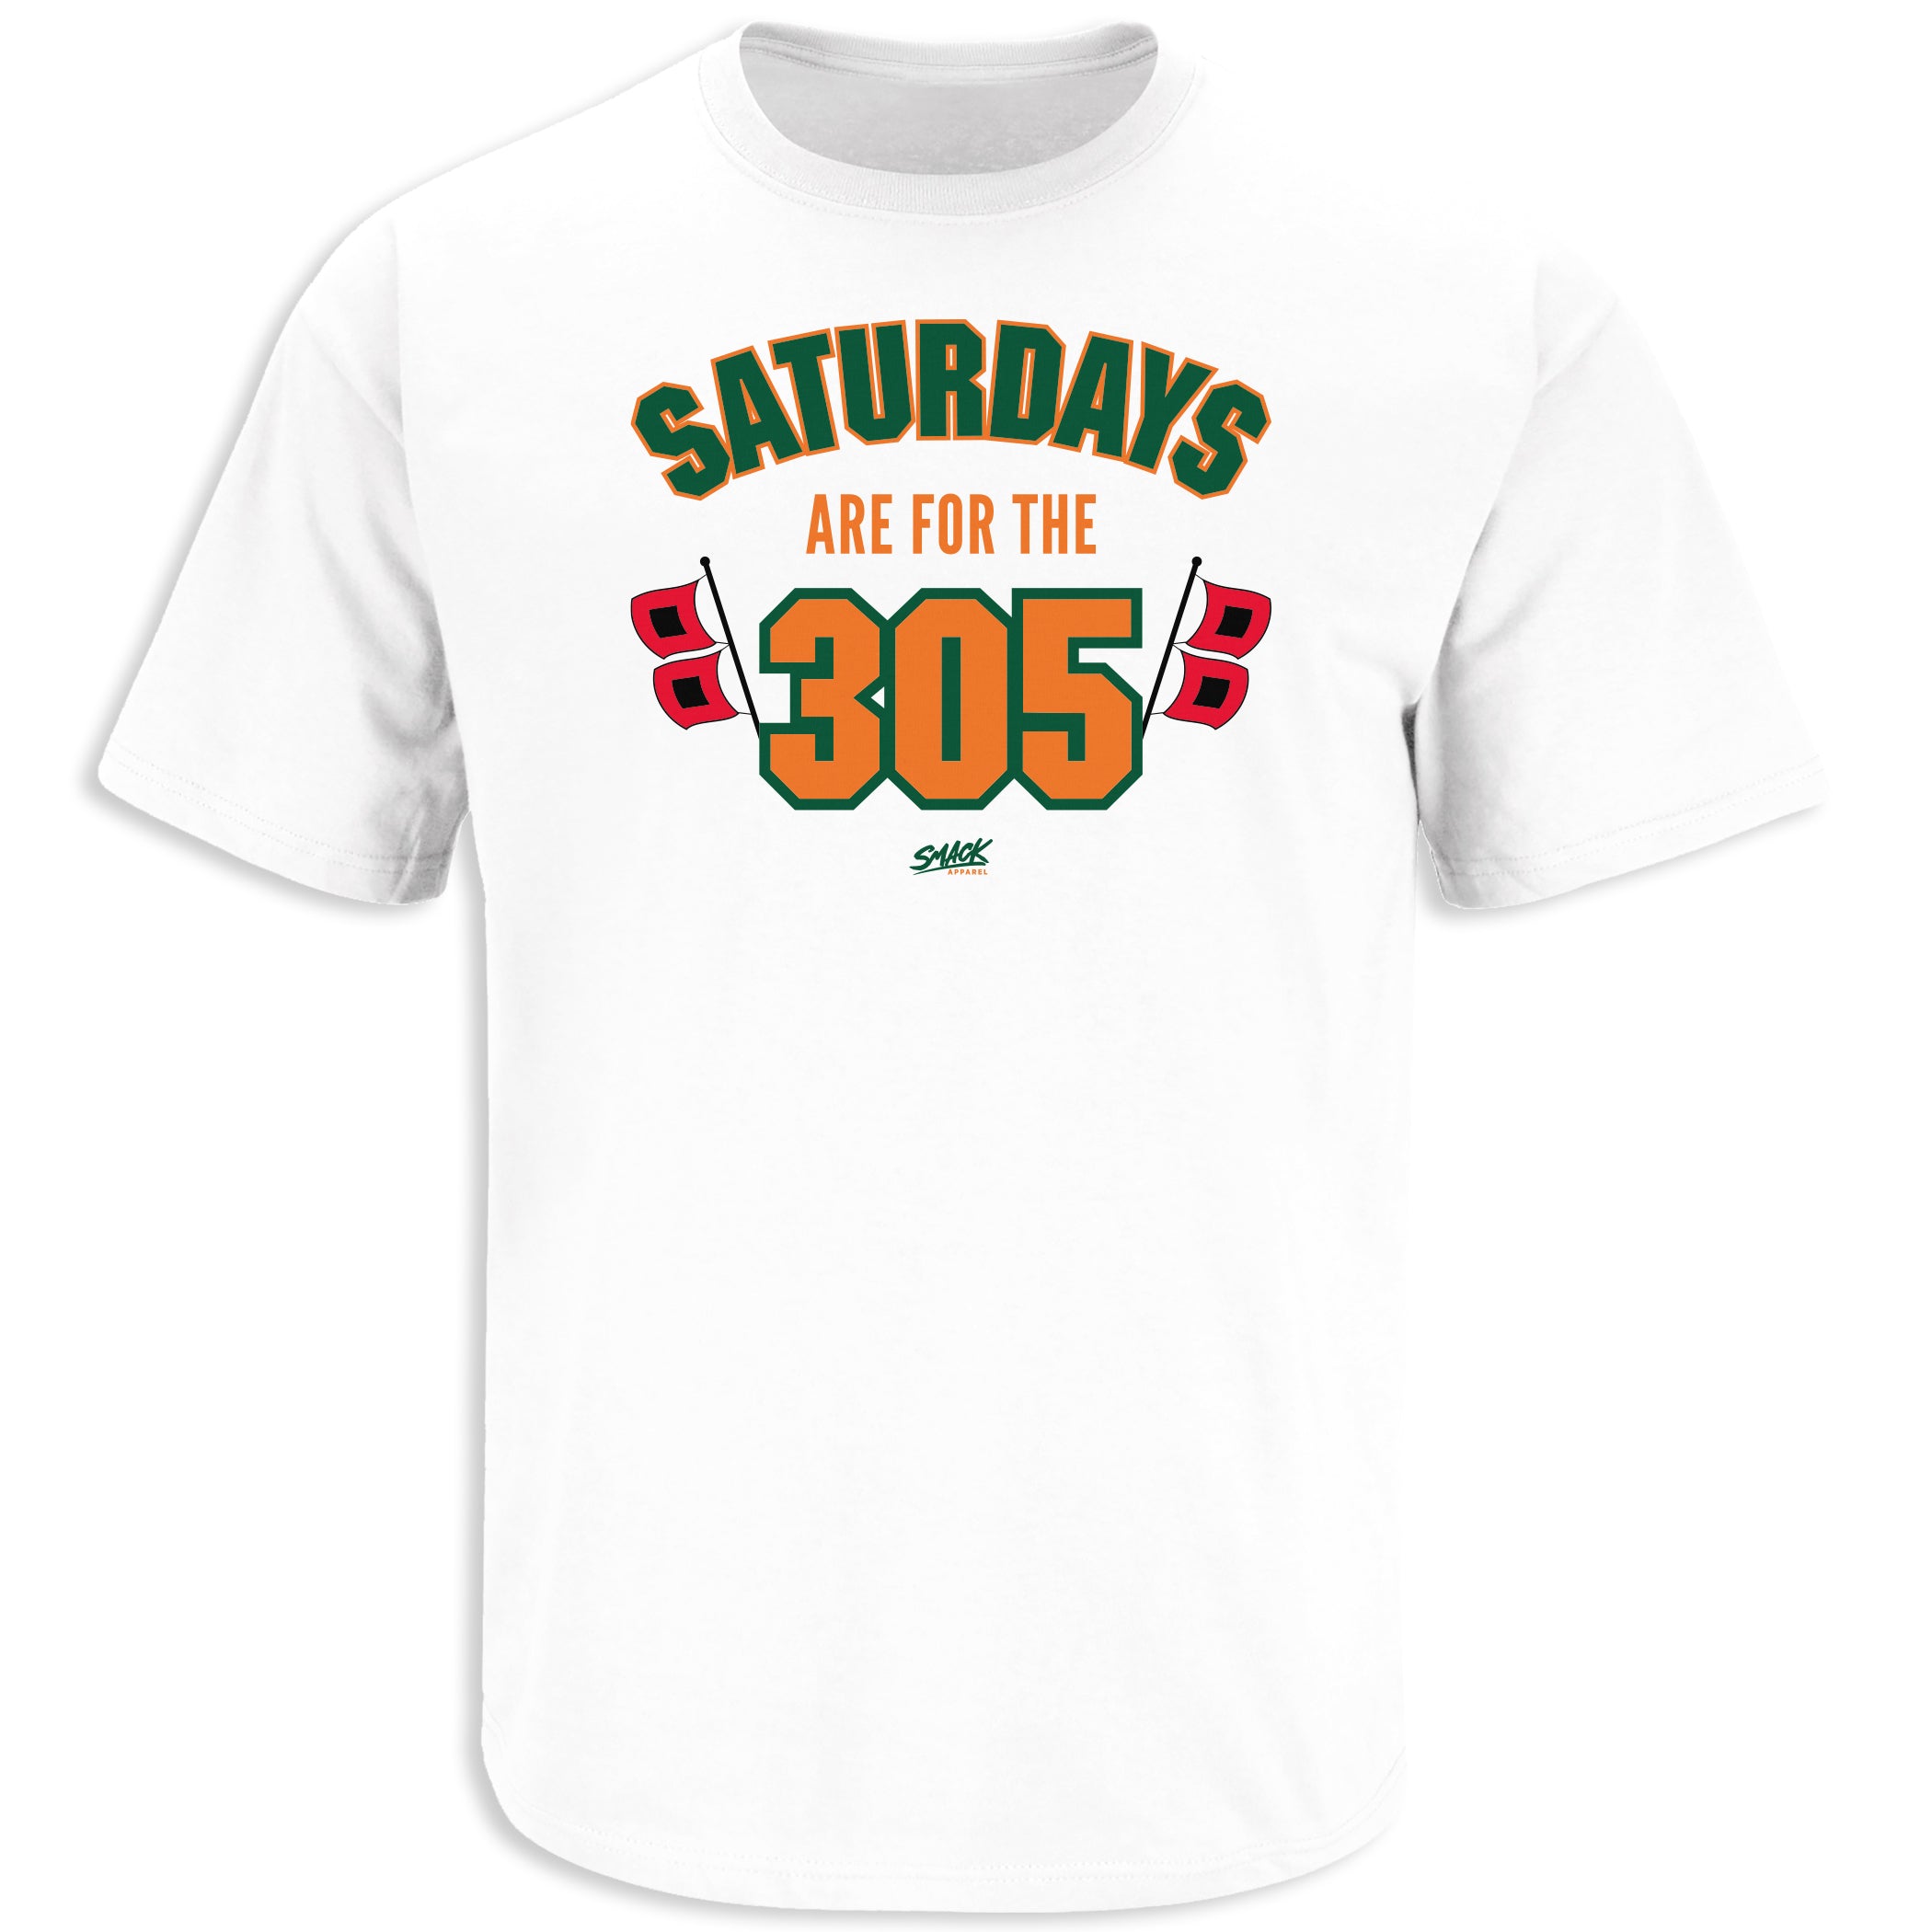 Miami Saturdays Are For The 305 T-Shirt - White